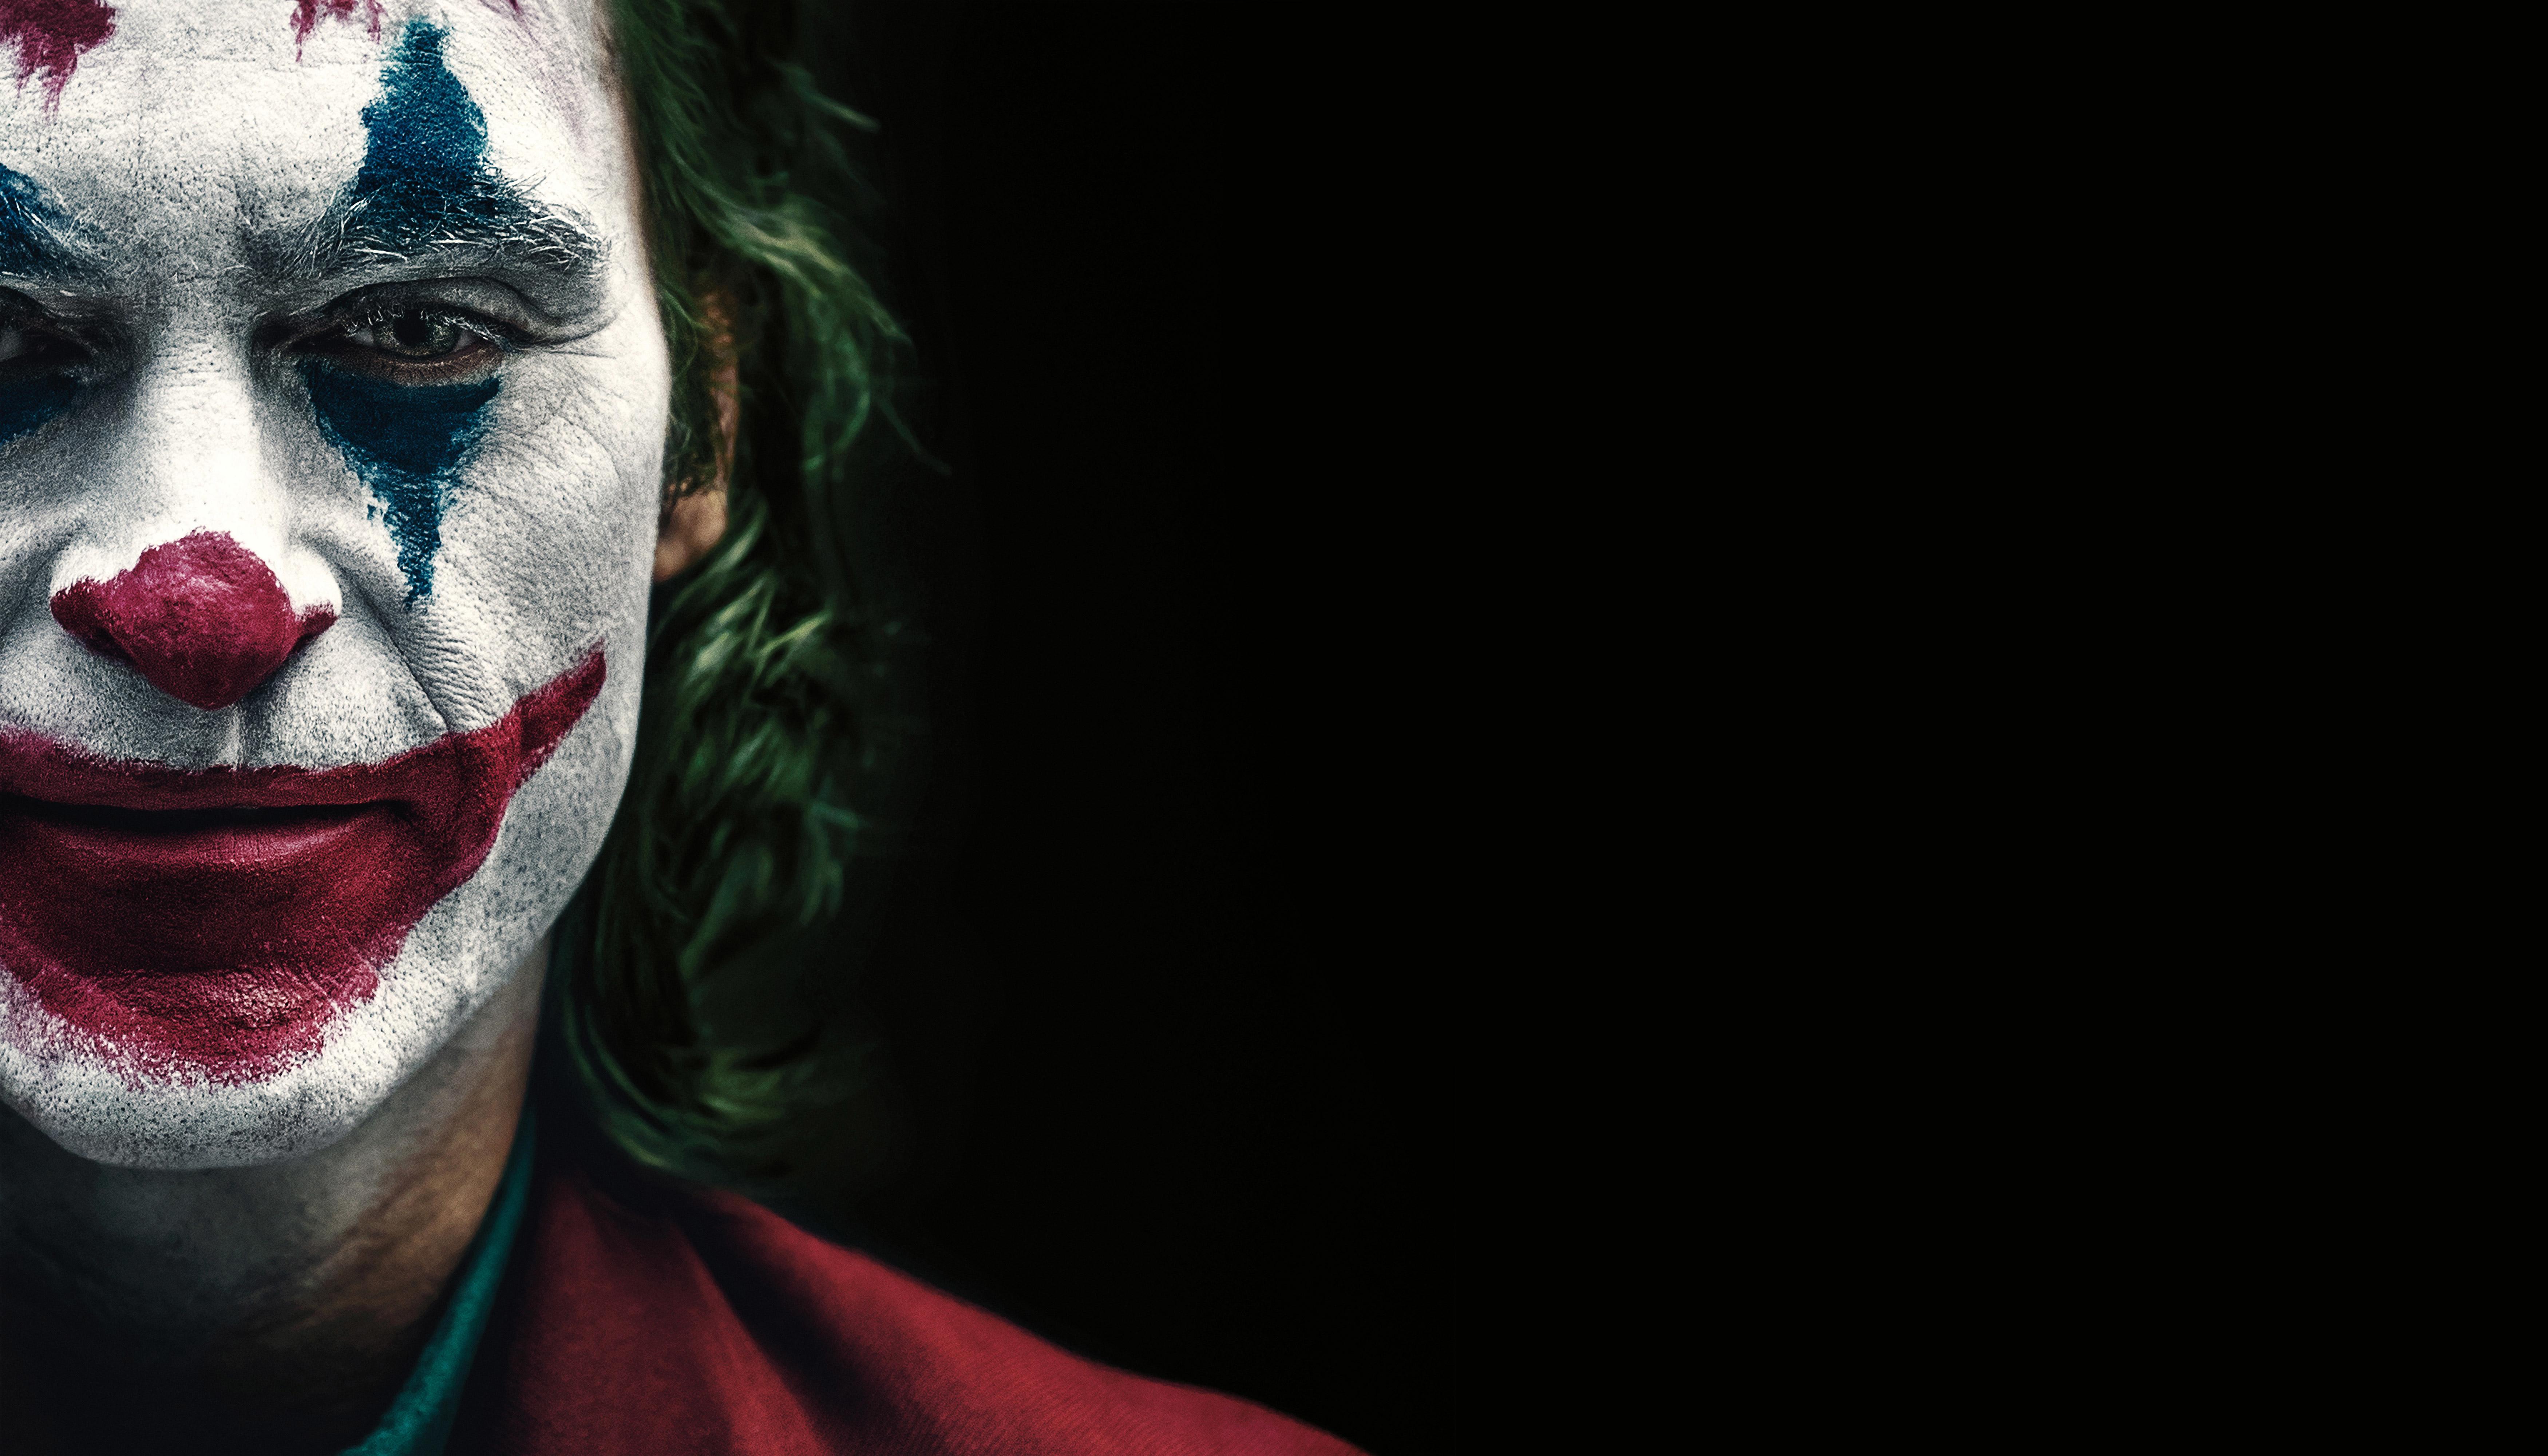 Joker 2019 Movie 8K Wallpaper, HD Movies 4K Wallpaper, Image